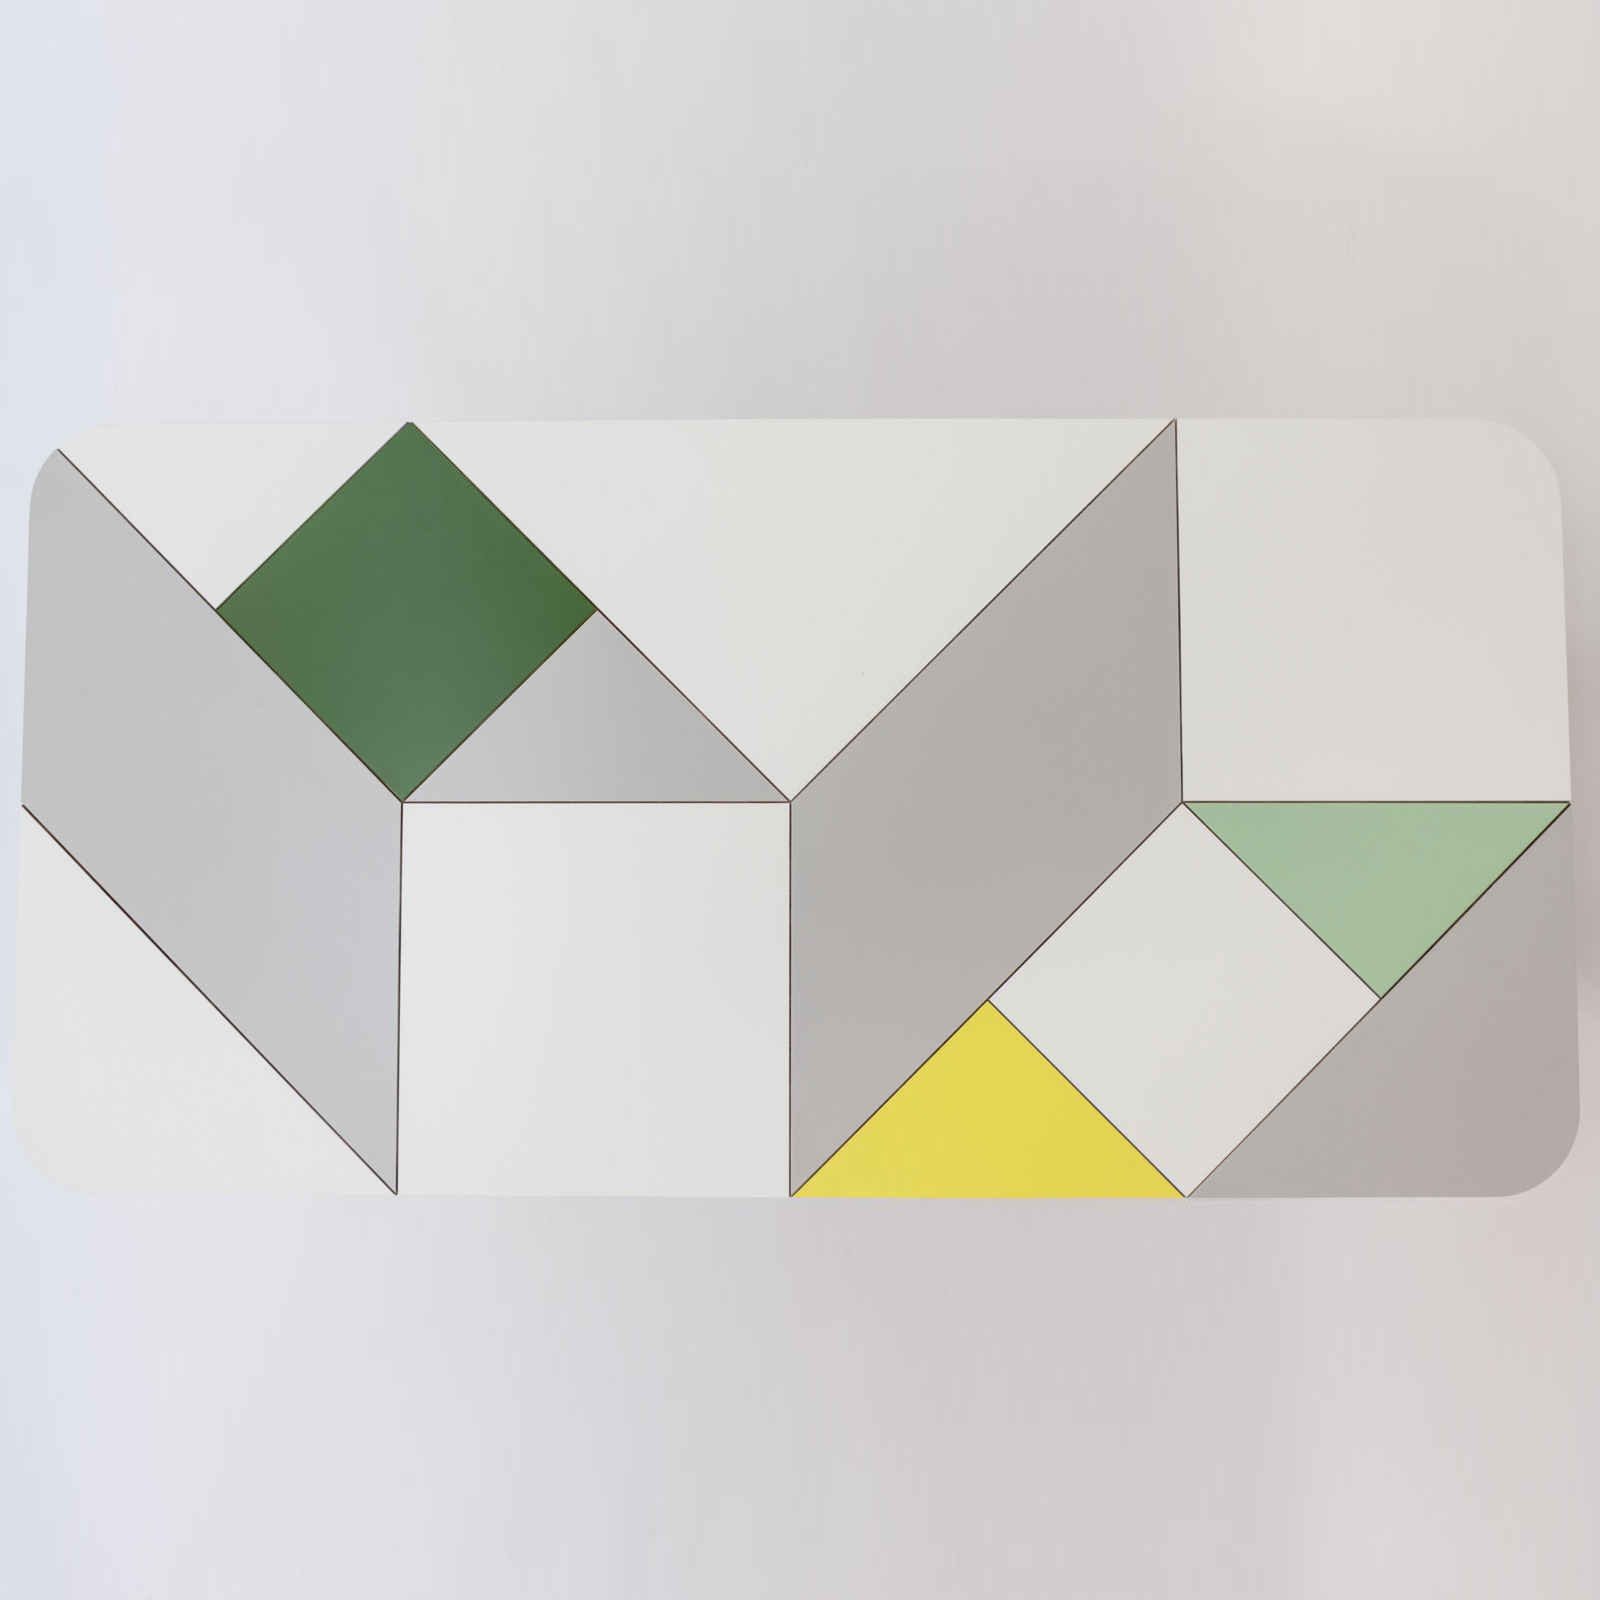 [Table] Dan Yeffet : Tangram 2833-architecture-design-muuuz-magazine-blog-decoration-interieur-art-maison-architecte-dan-yeffet-gallery-s-bensimon-table-milan-salone-del-mobile01